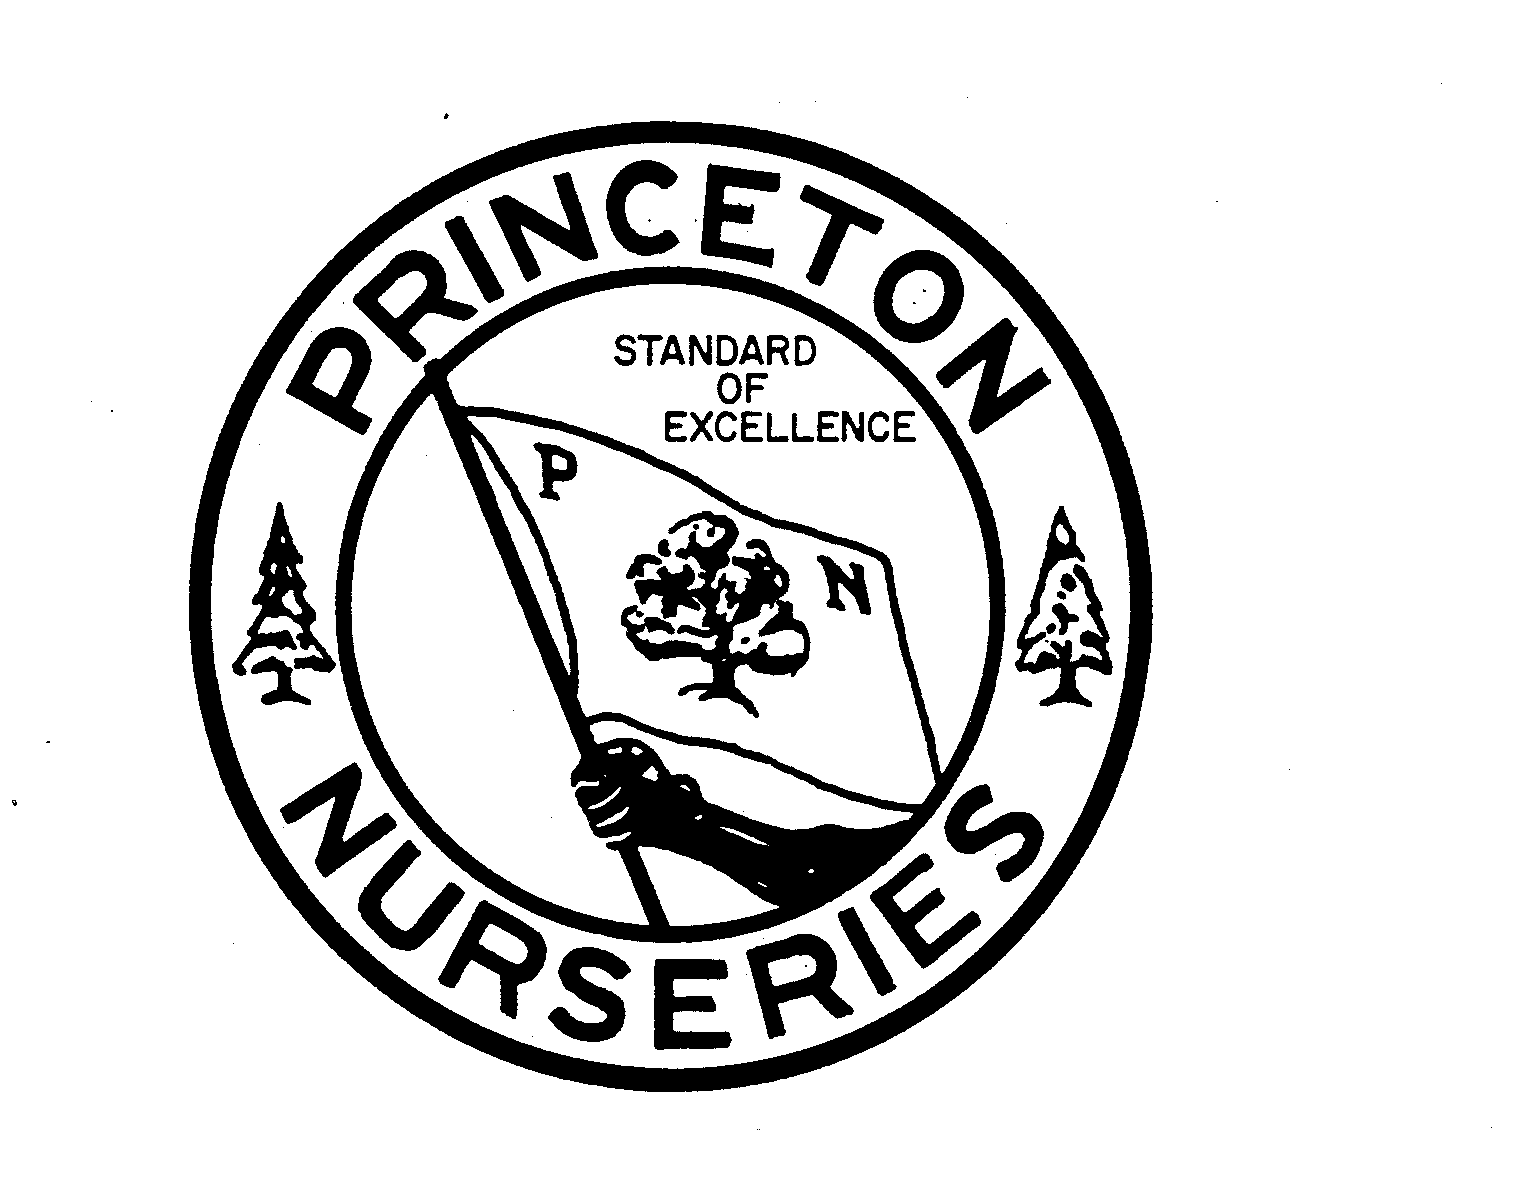  PRINCETON NURSERIES STANDARD OF EXCELLENCE